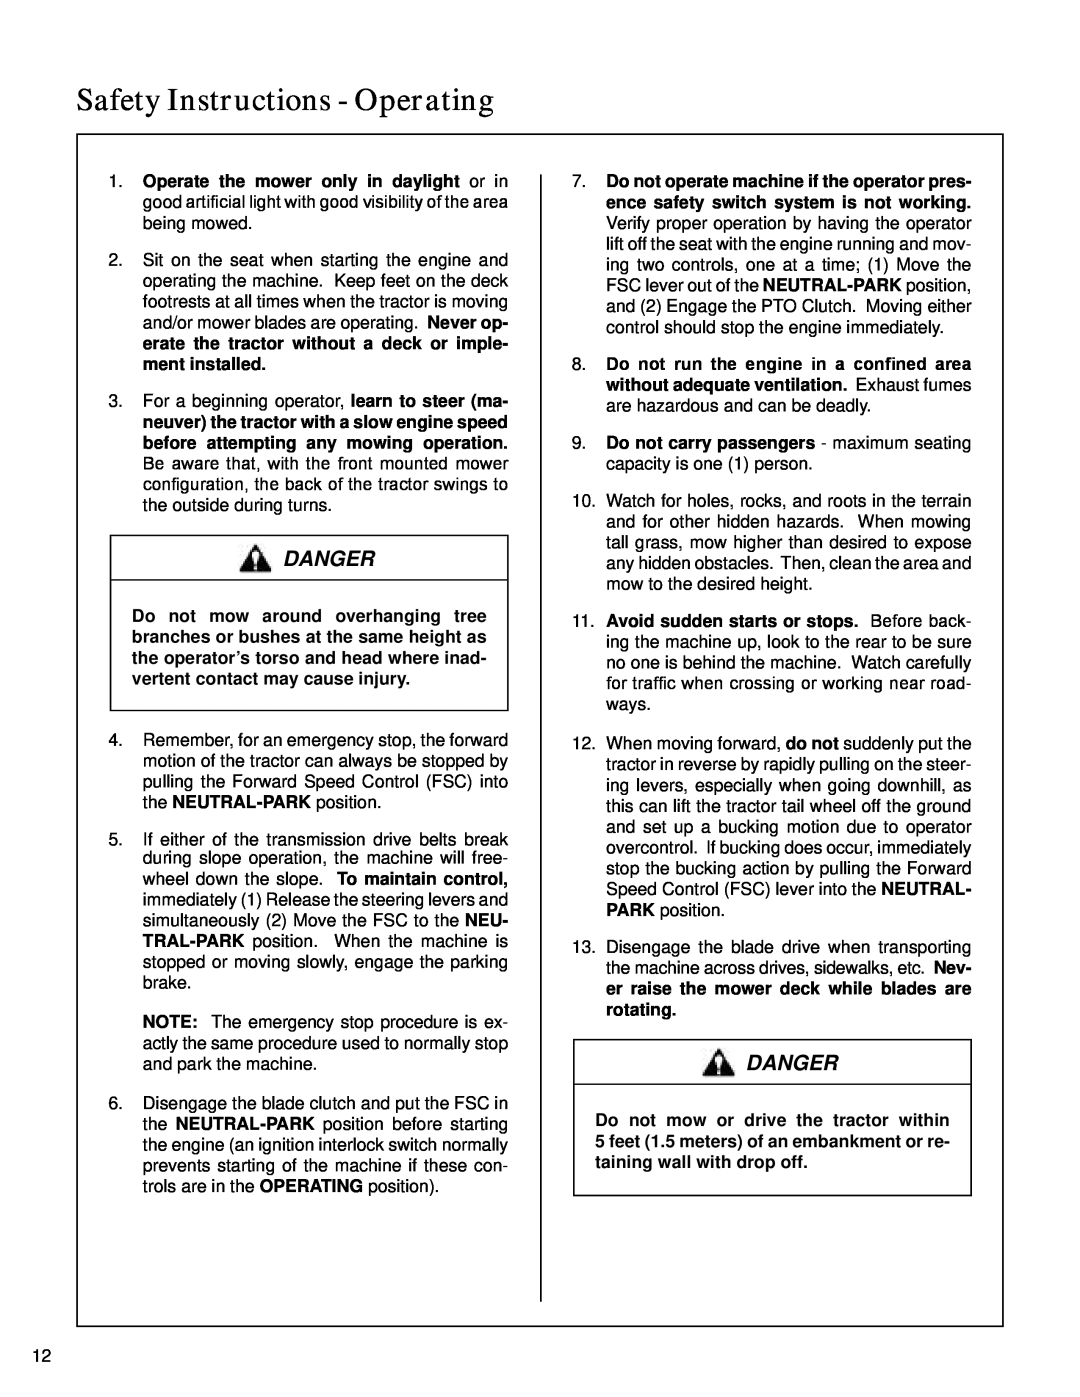 Walker S14 manual Safety Instructions - Operating, Danger 